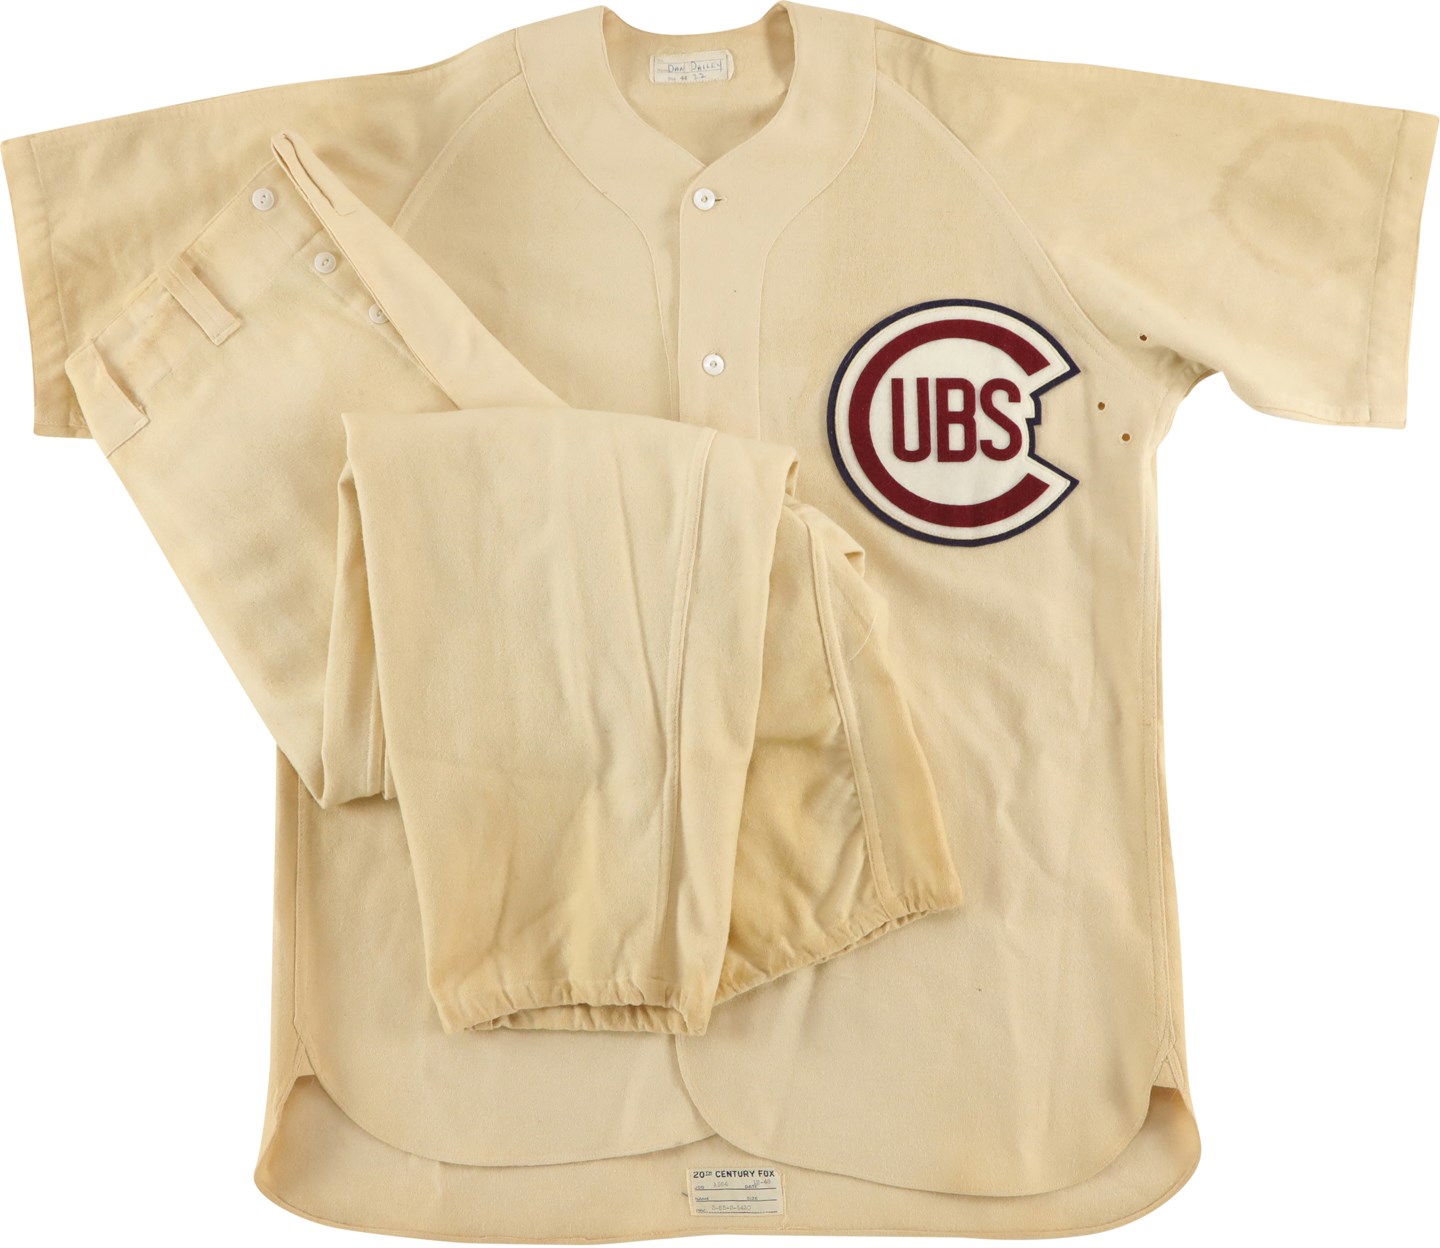 Baseball Equipment - 1952 Dan Dailey (as Dizzy Dean) "The Pride of St Louis" Set Worn Uniform